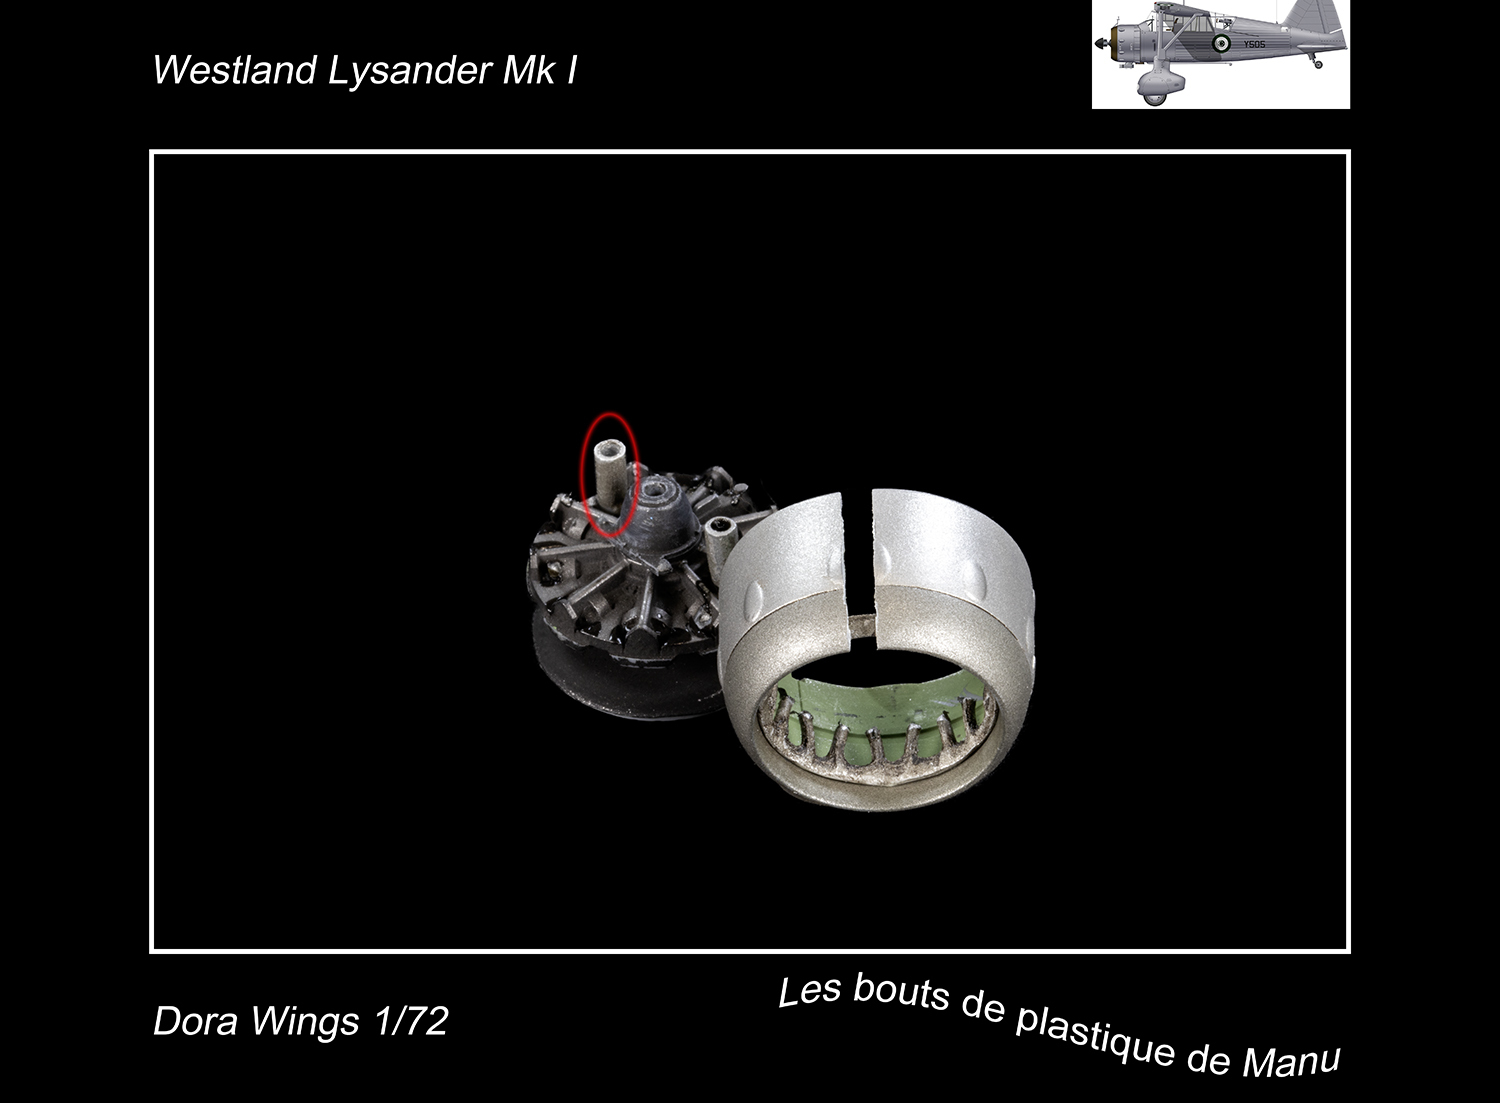 [Dora Wings] Westland Lysander Mk I - Je préfère en rire... - Page 4 Uf15